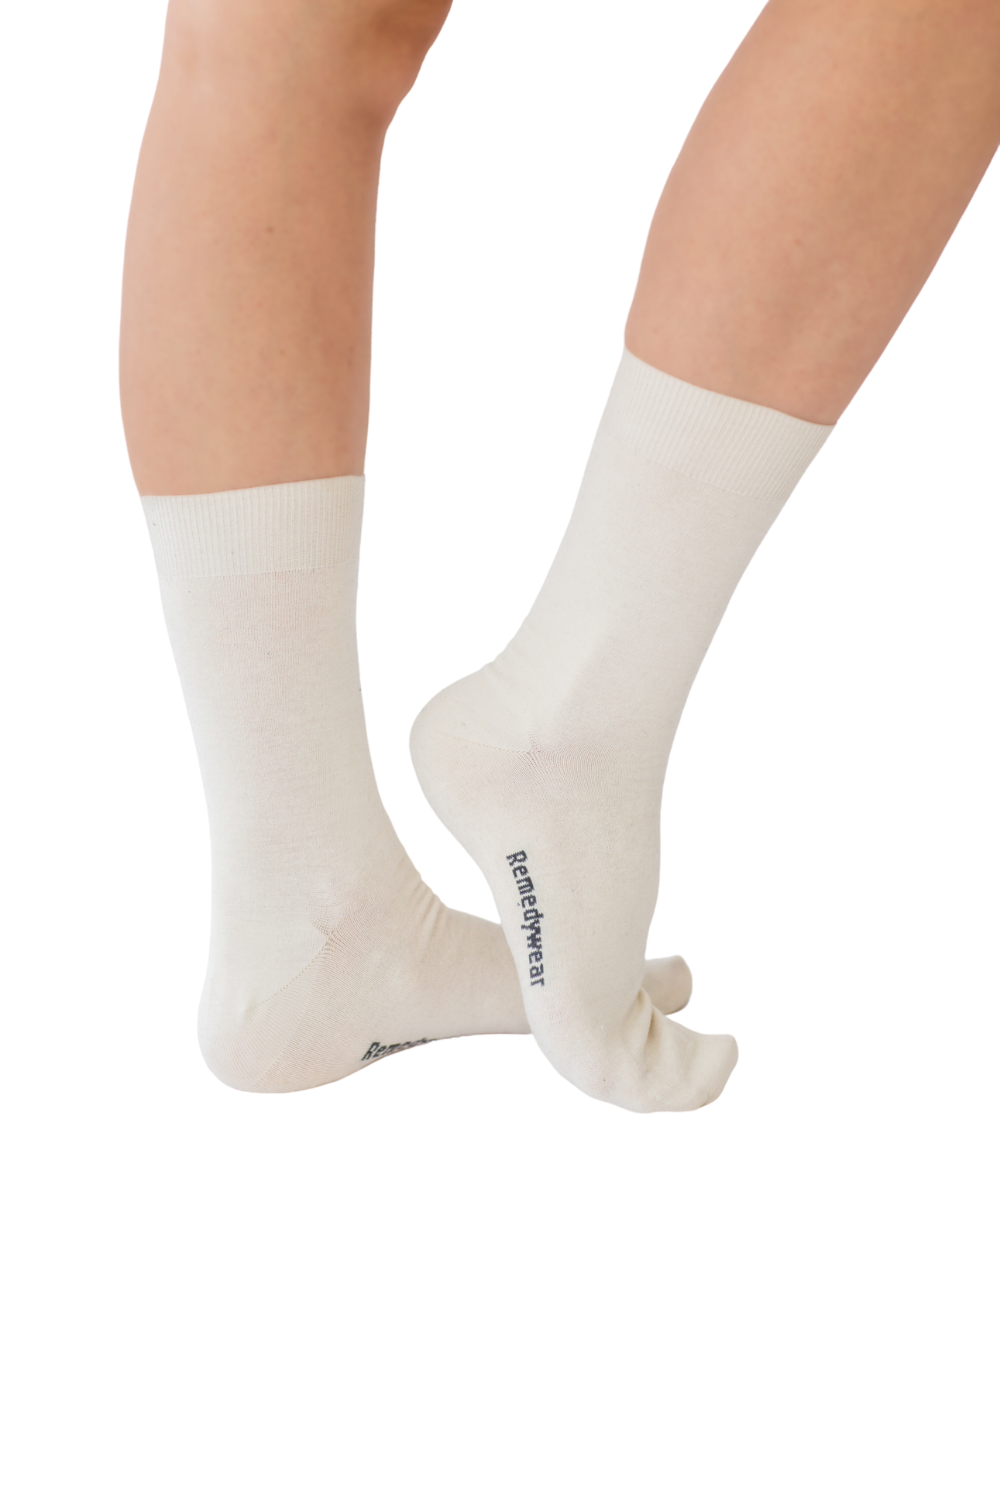 socks for itchy feet - Remedywear white socks